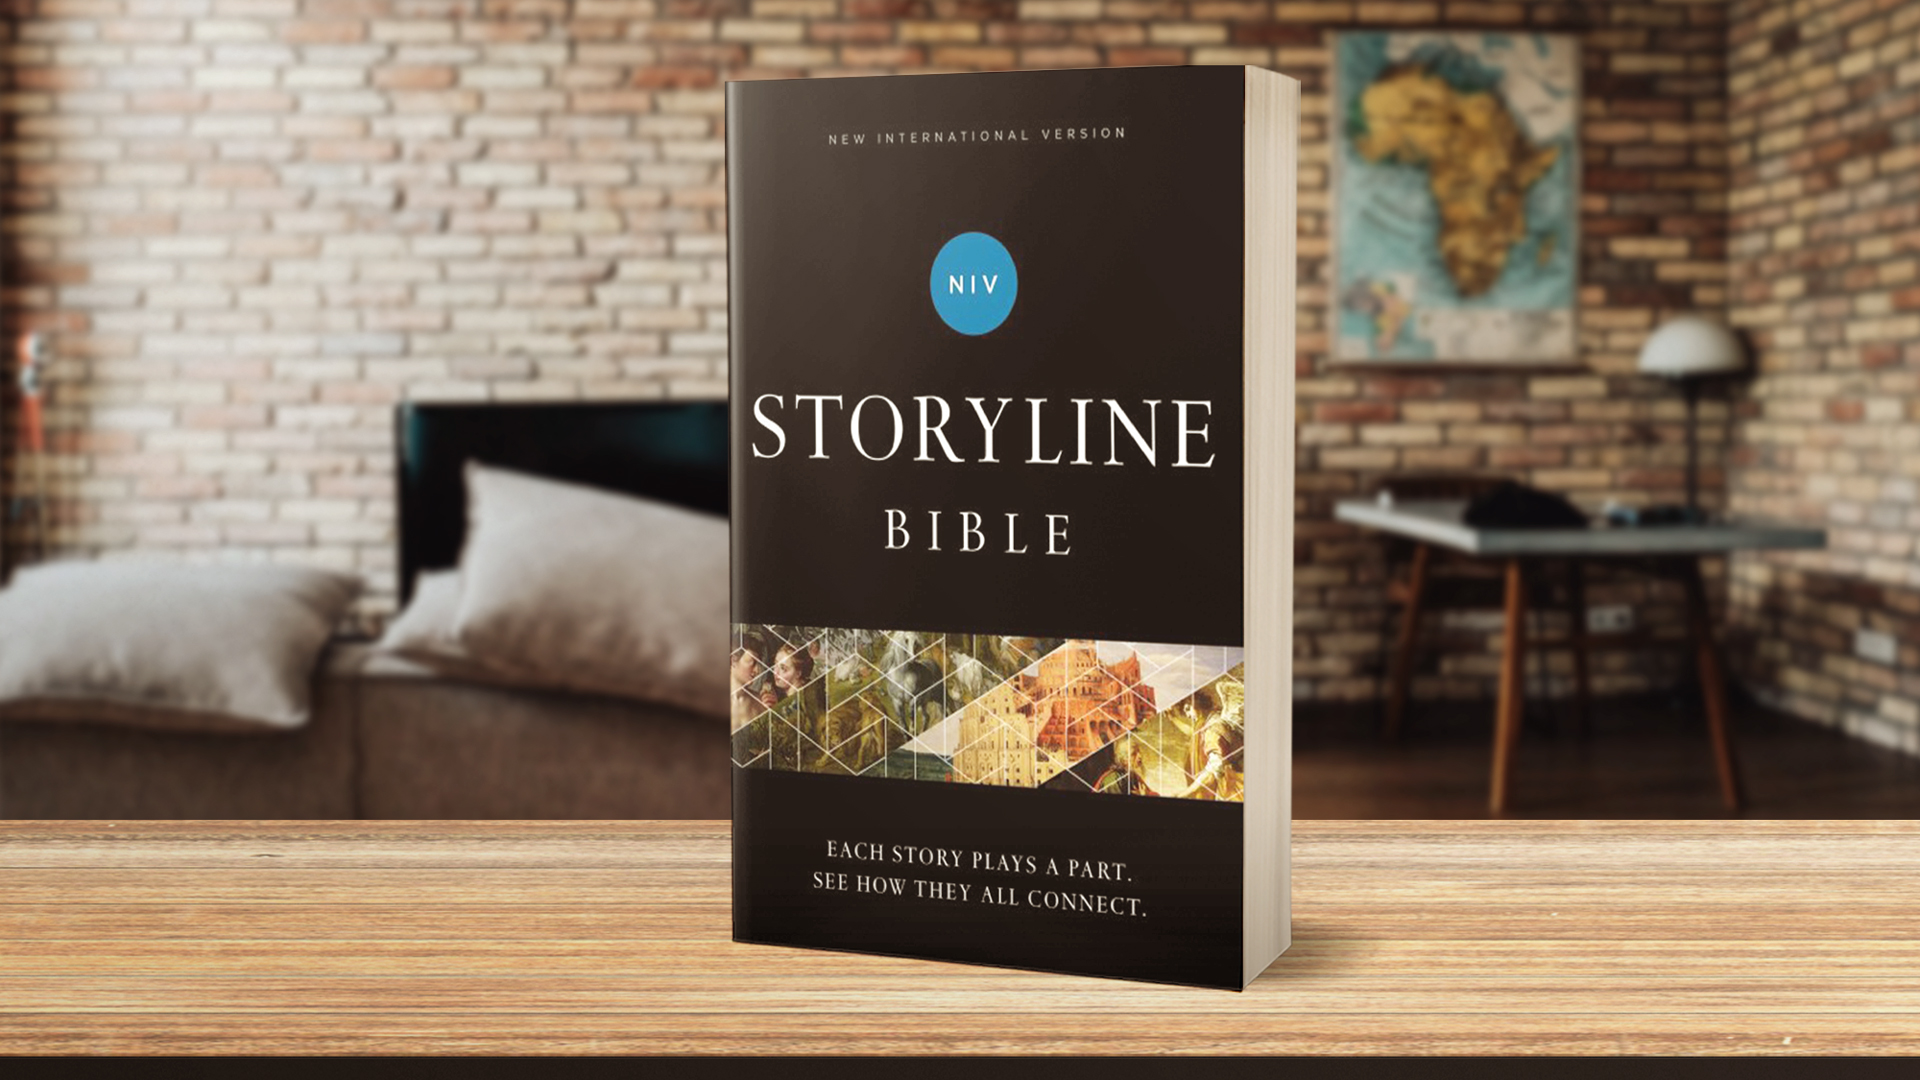 NIV Storyline Bible truth about Jesus